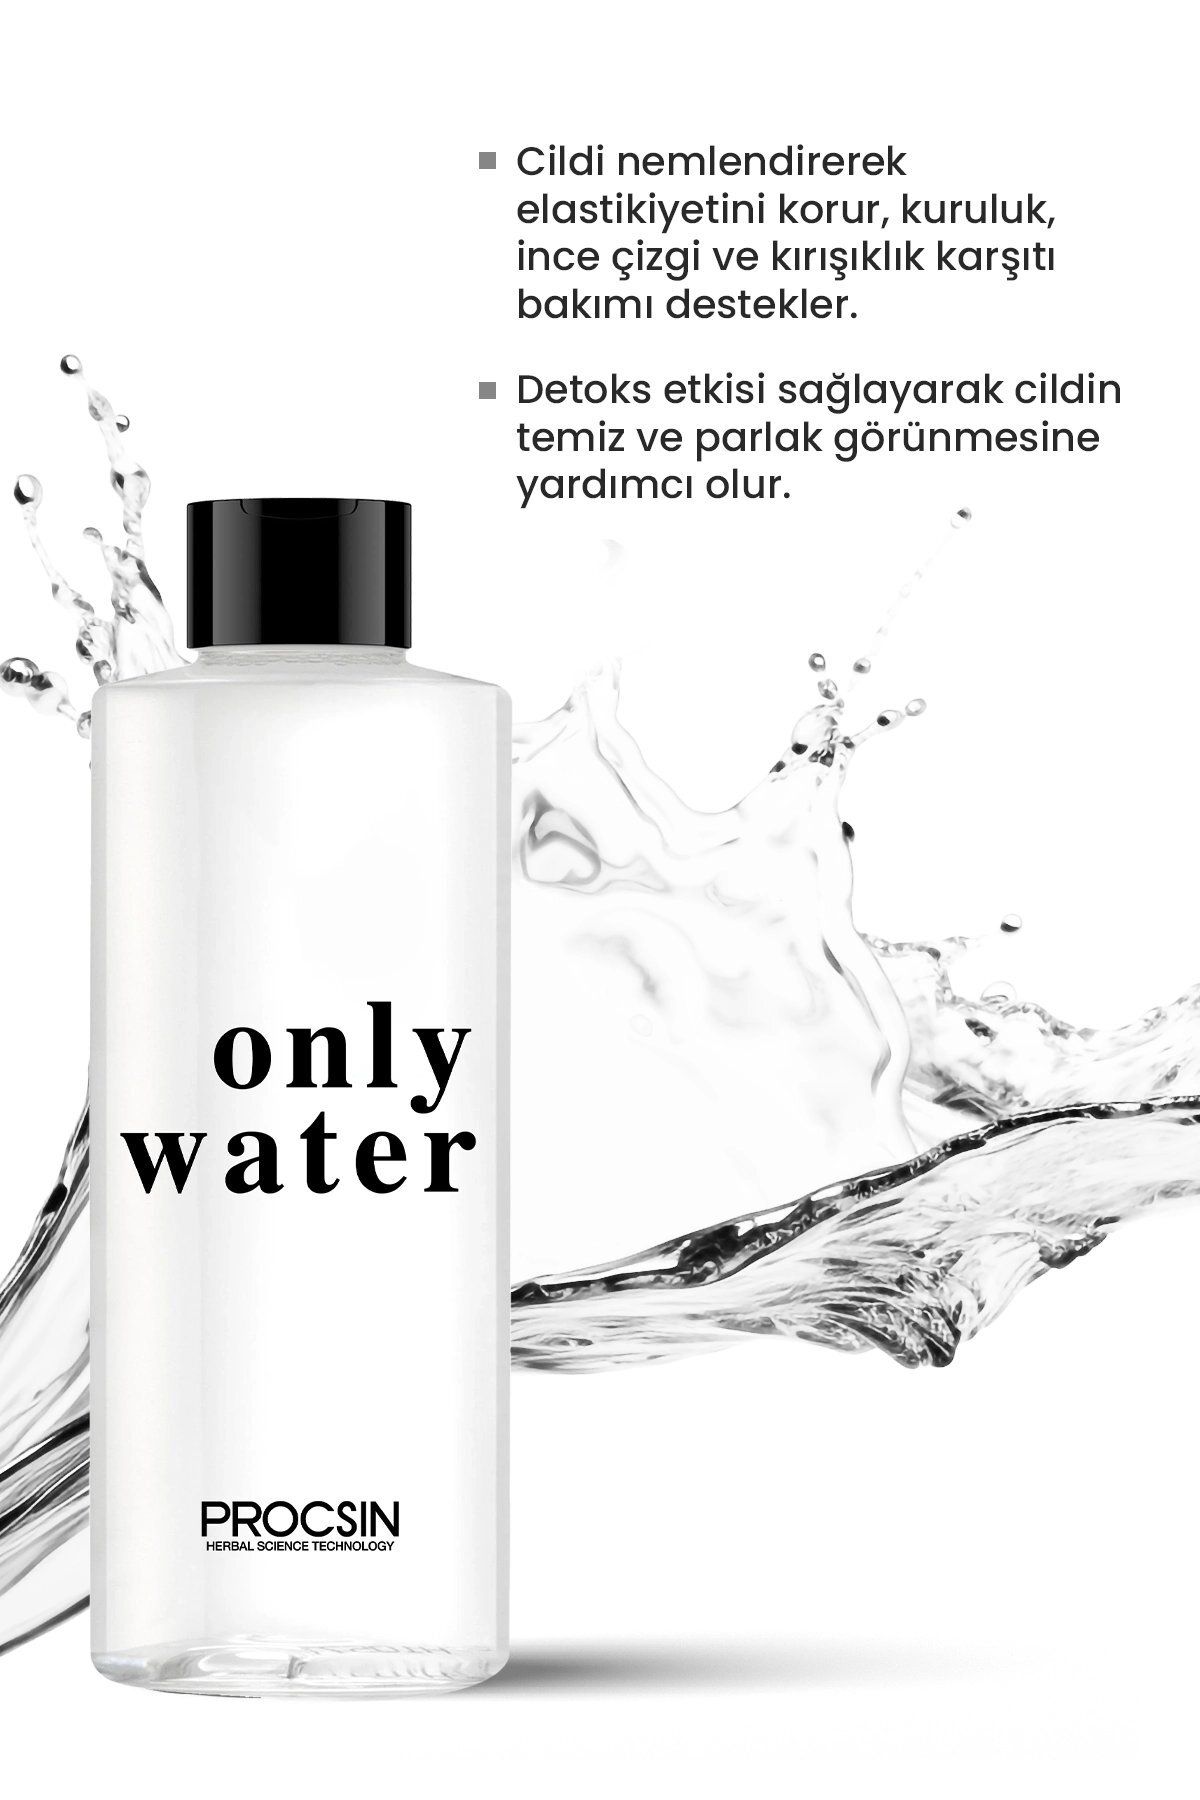 PROCSIN آب تنها (100٪ آب) پاک کننده طبیعی پوست و آرایش